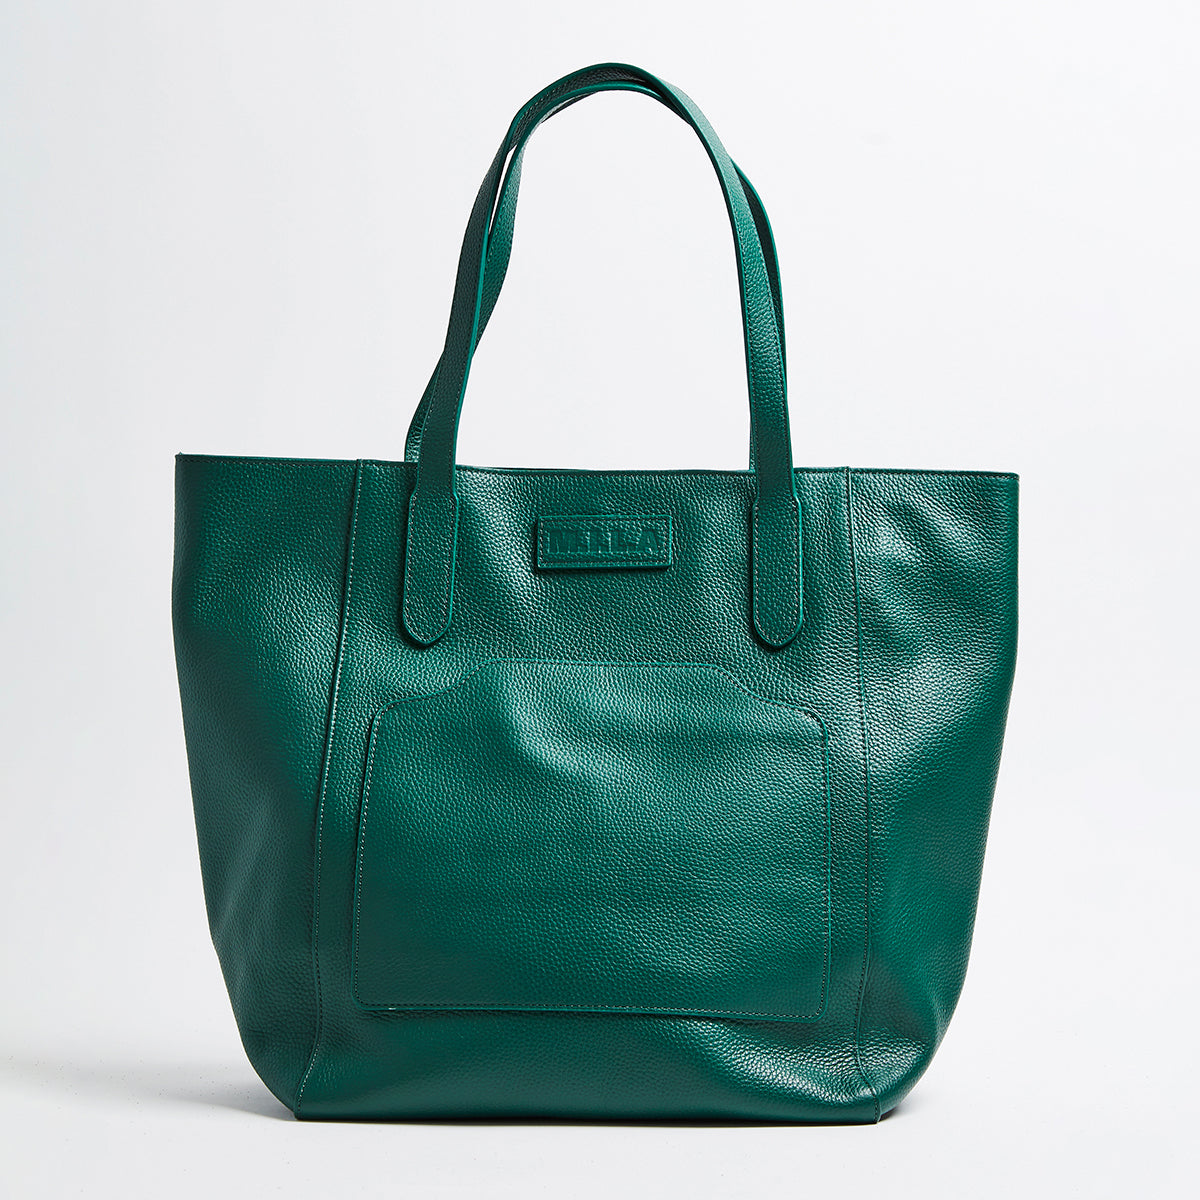 Designer Handbags products for sale